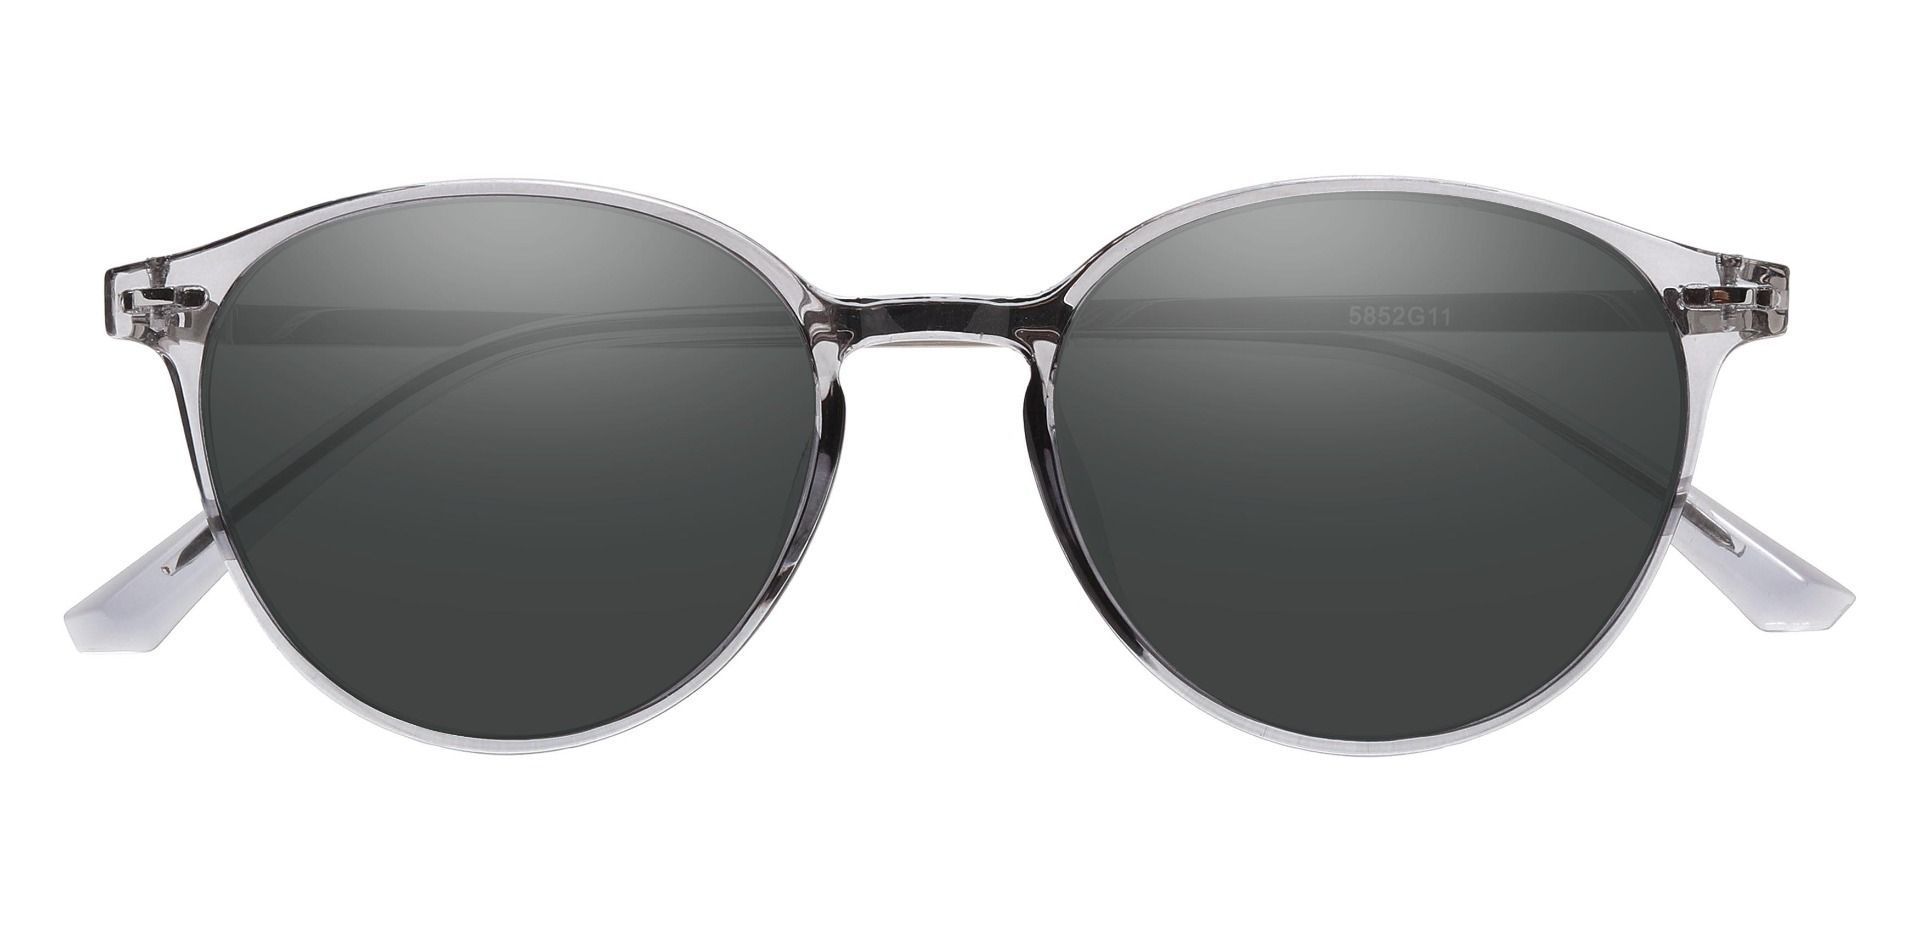 Springer Round Lined Bifocal Sunglasses - Gray Frame With Gray Lenses